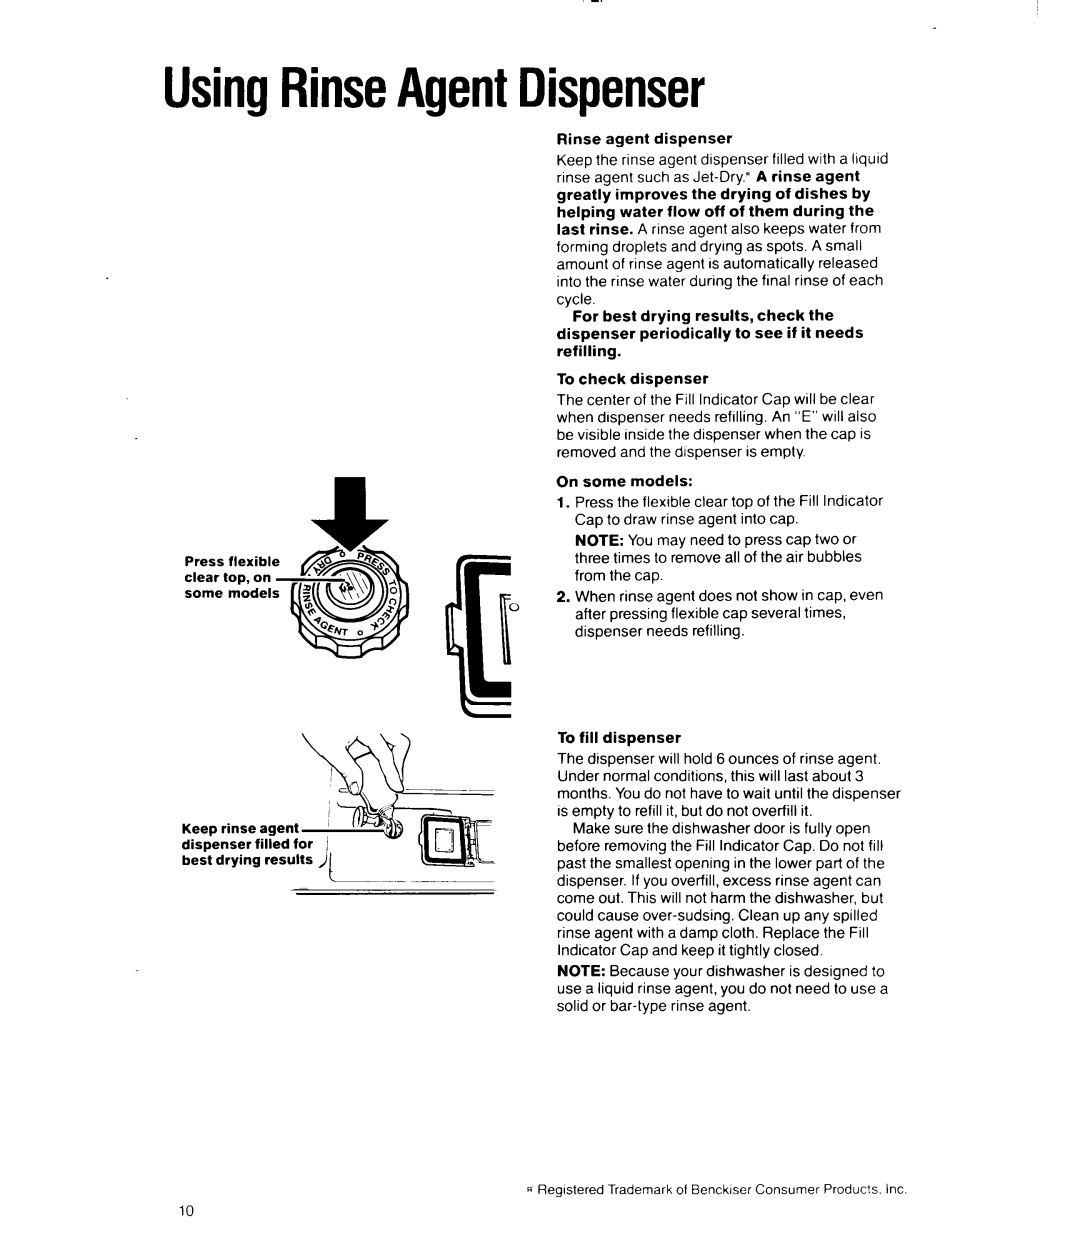 Whirlpool 8000 Series manual UsingRinseAgentDispenser 